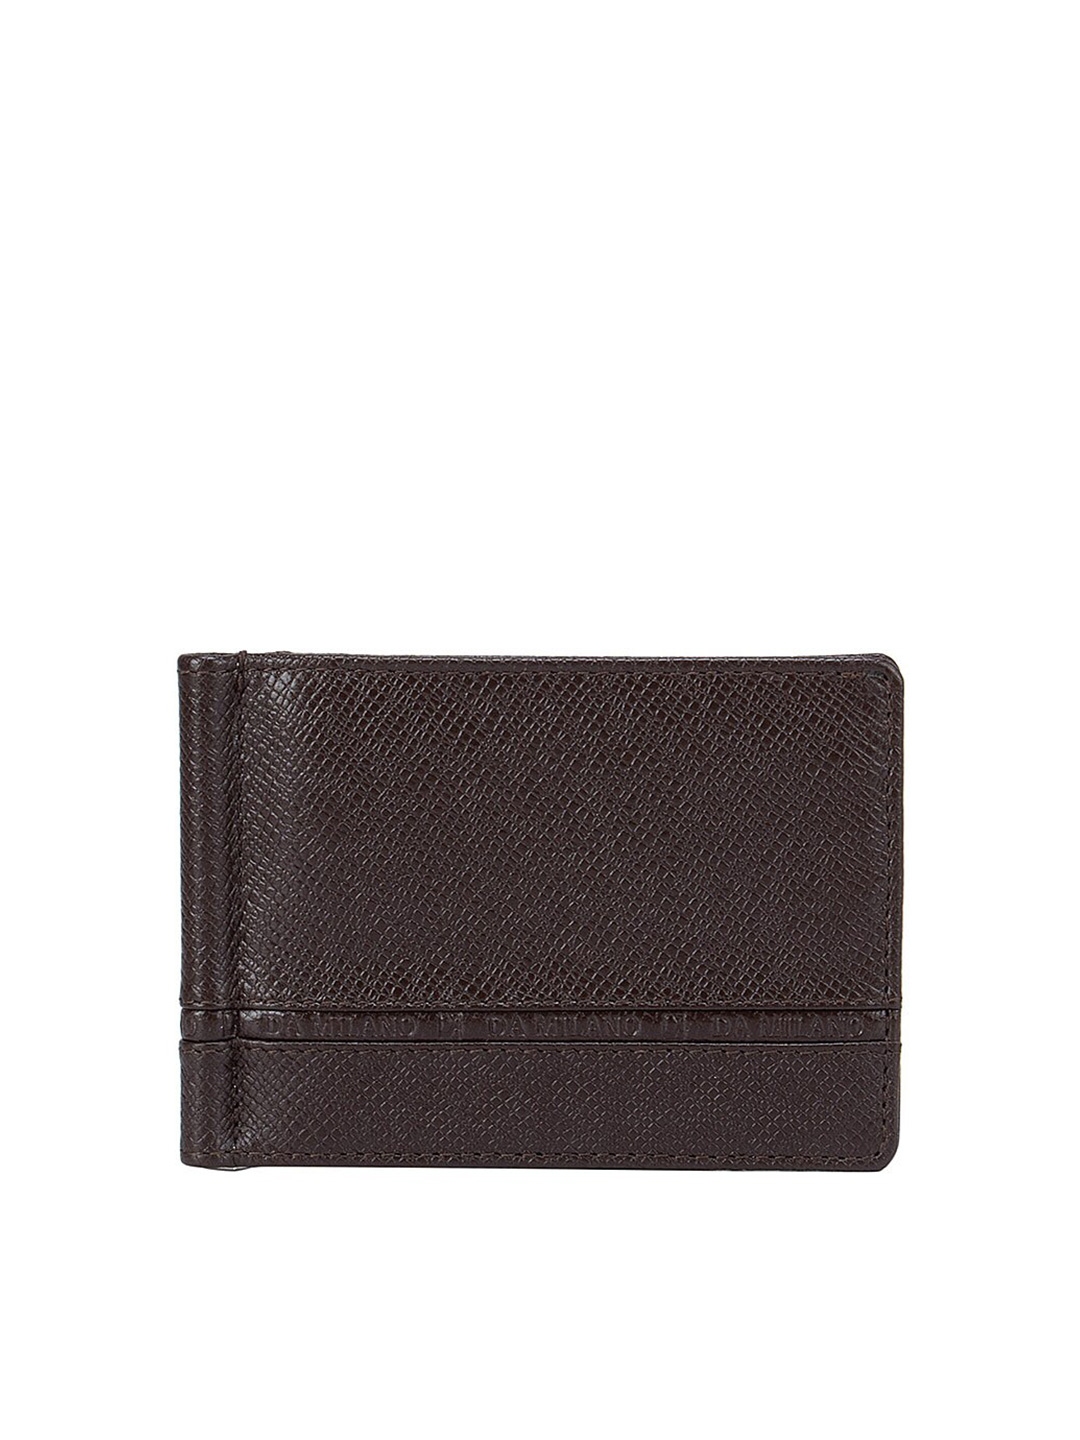 Buy Da Milano Men Brown Leather Money Clip - Wallets for Men 19244442 ...